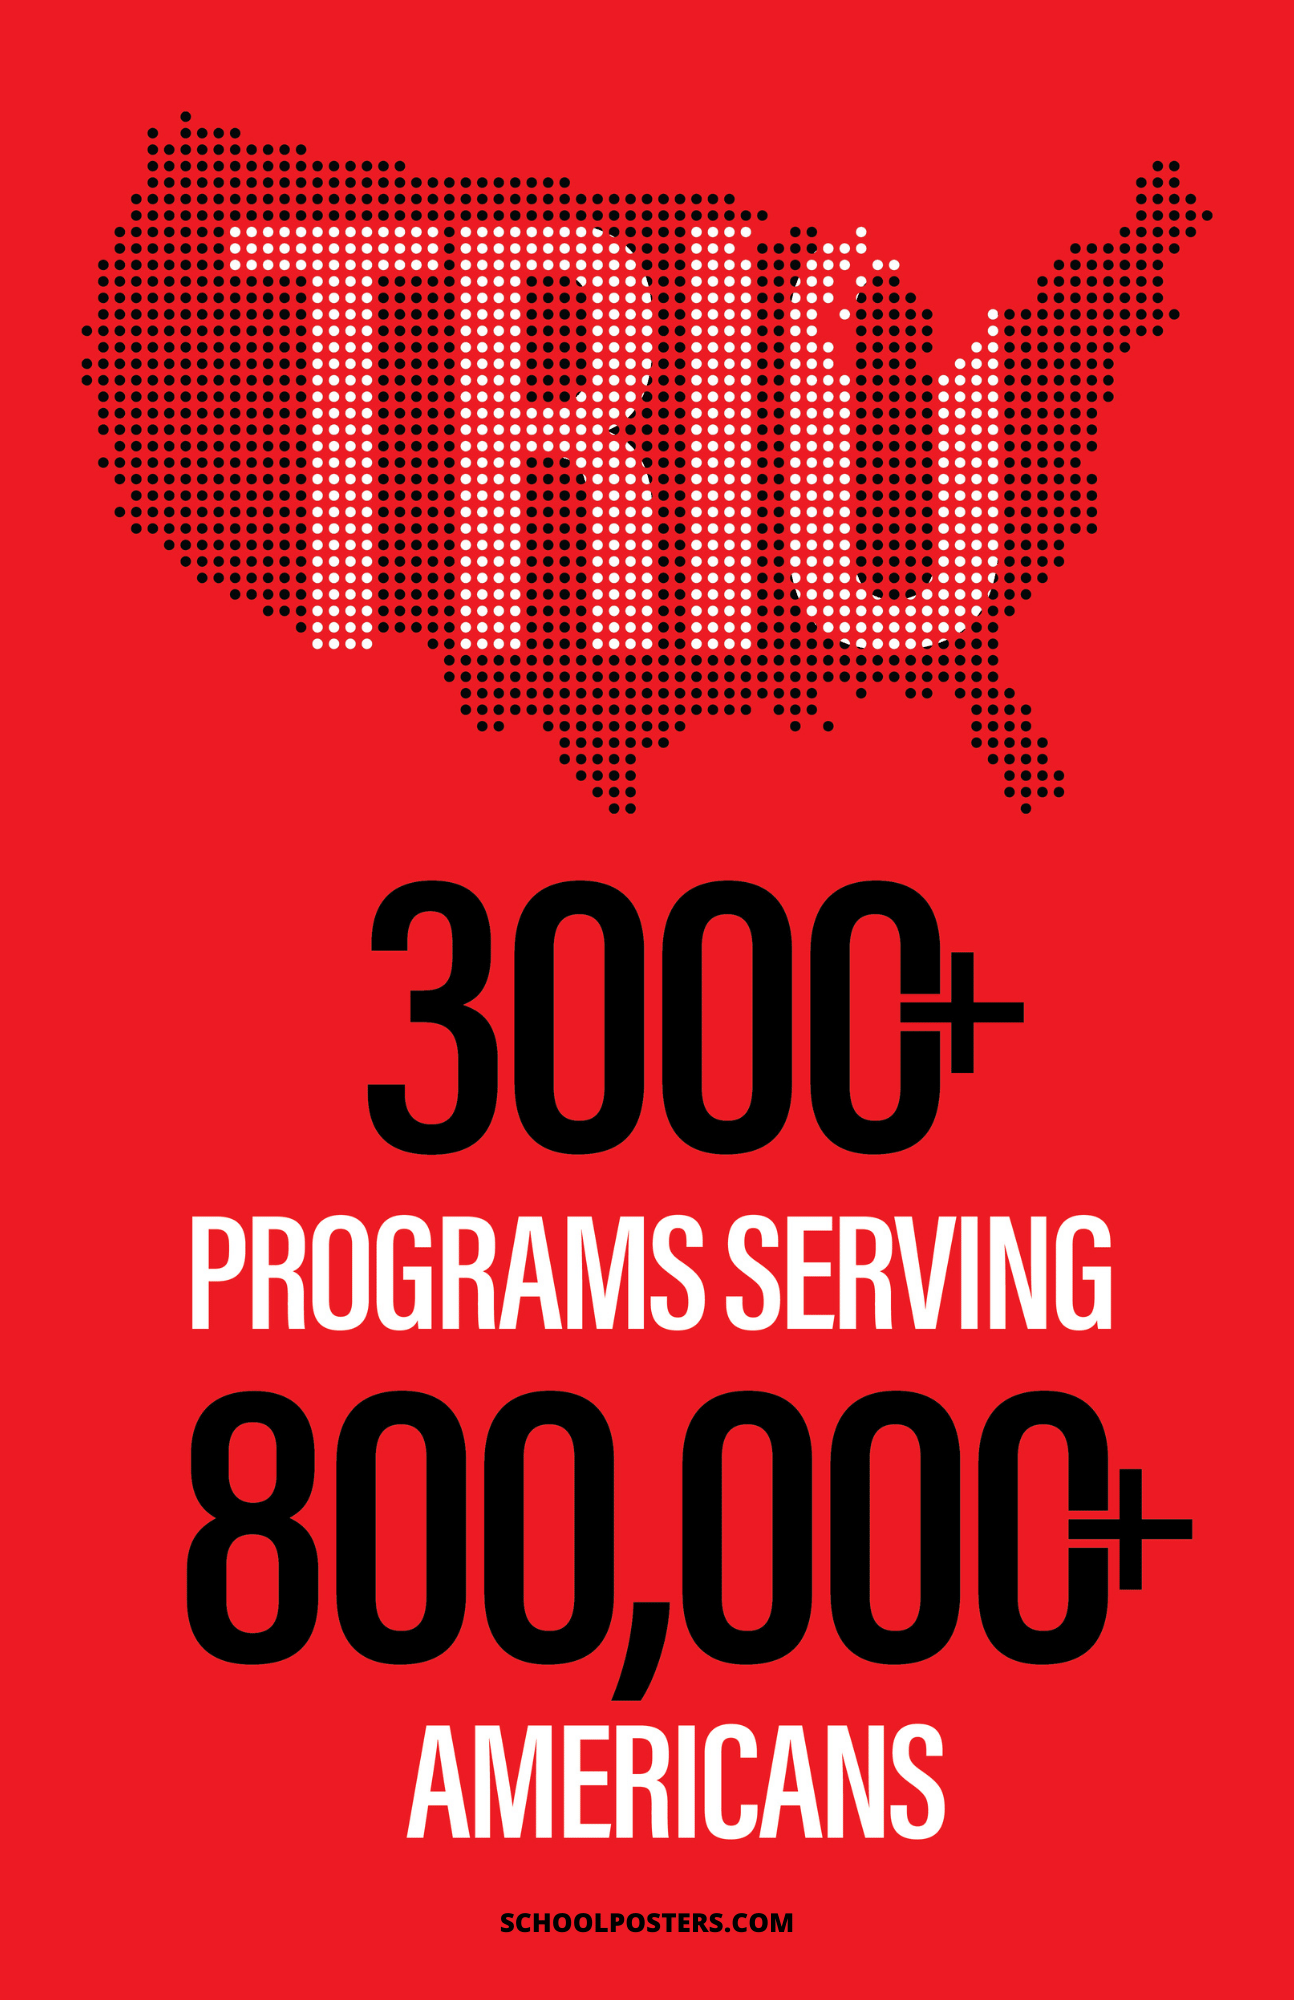 TRIO 3000 Programs Poster